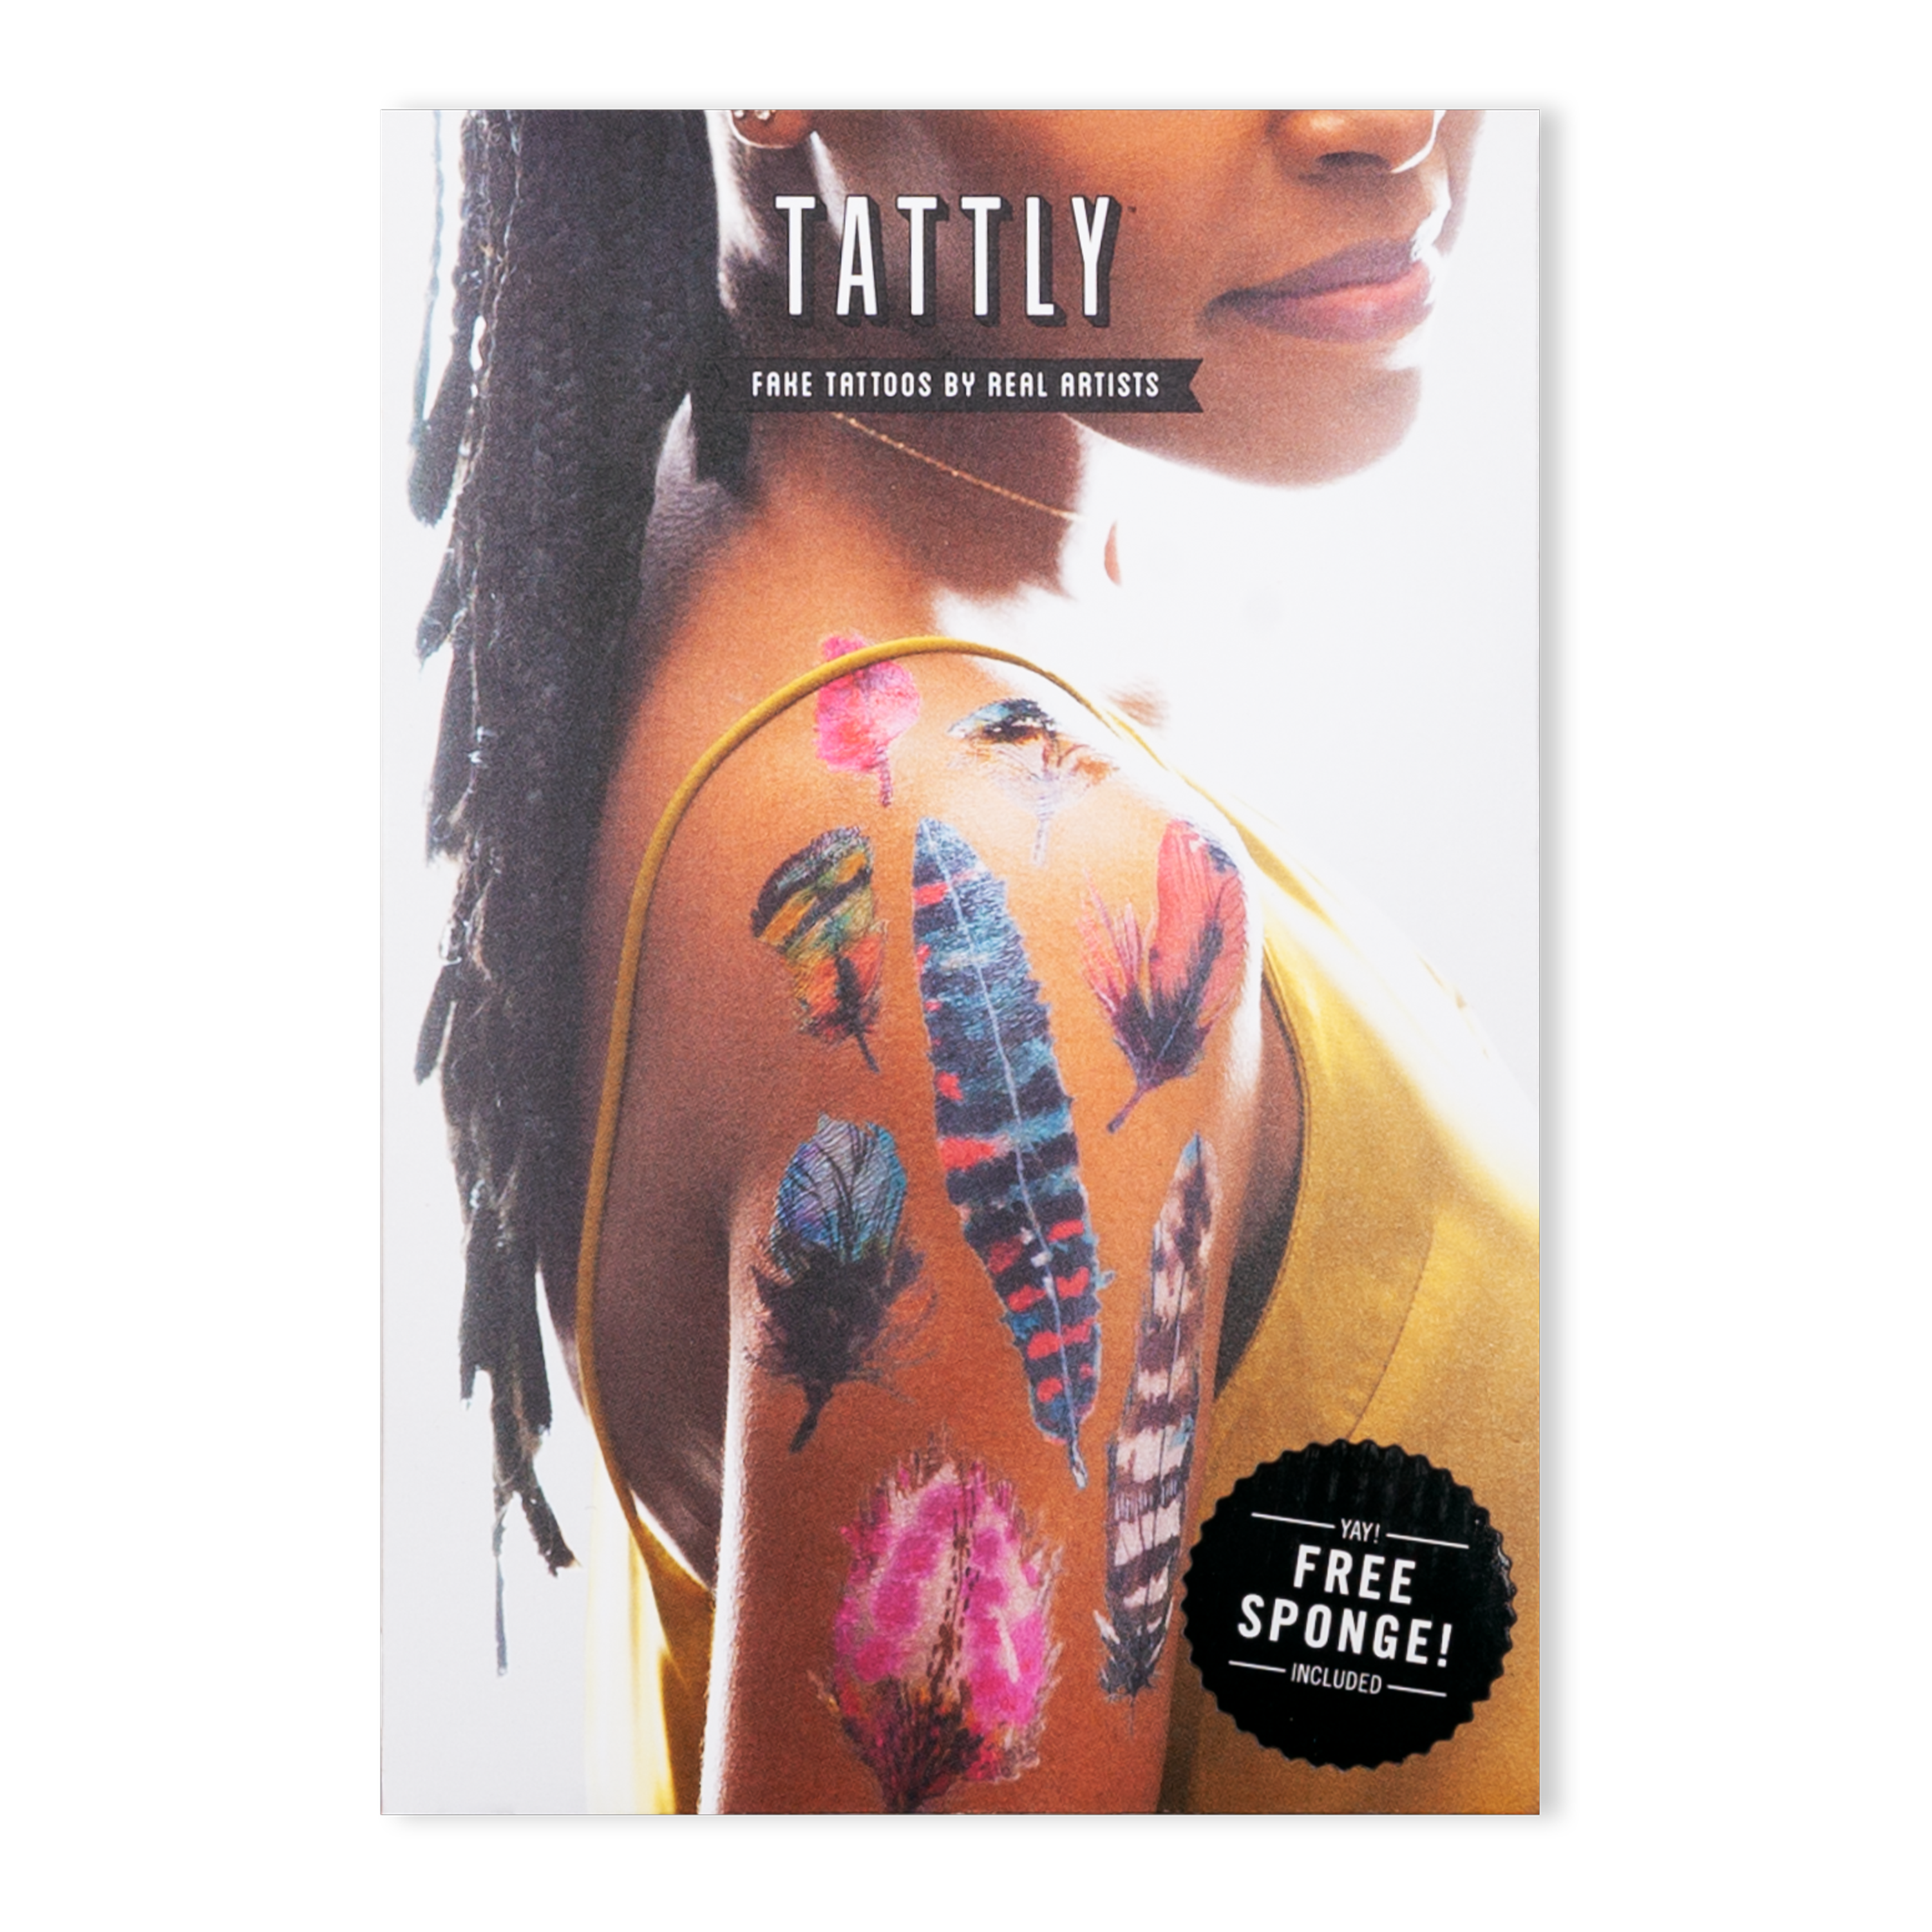 Set Tattoo Studio Logo Templates On Dark Background Royalty Free SVG,  Cliparts, Vectors, and Stock Illustration. Image 46650613.